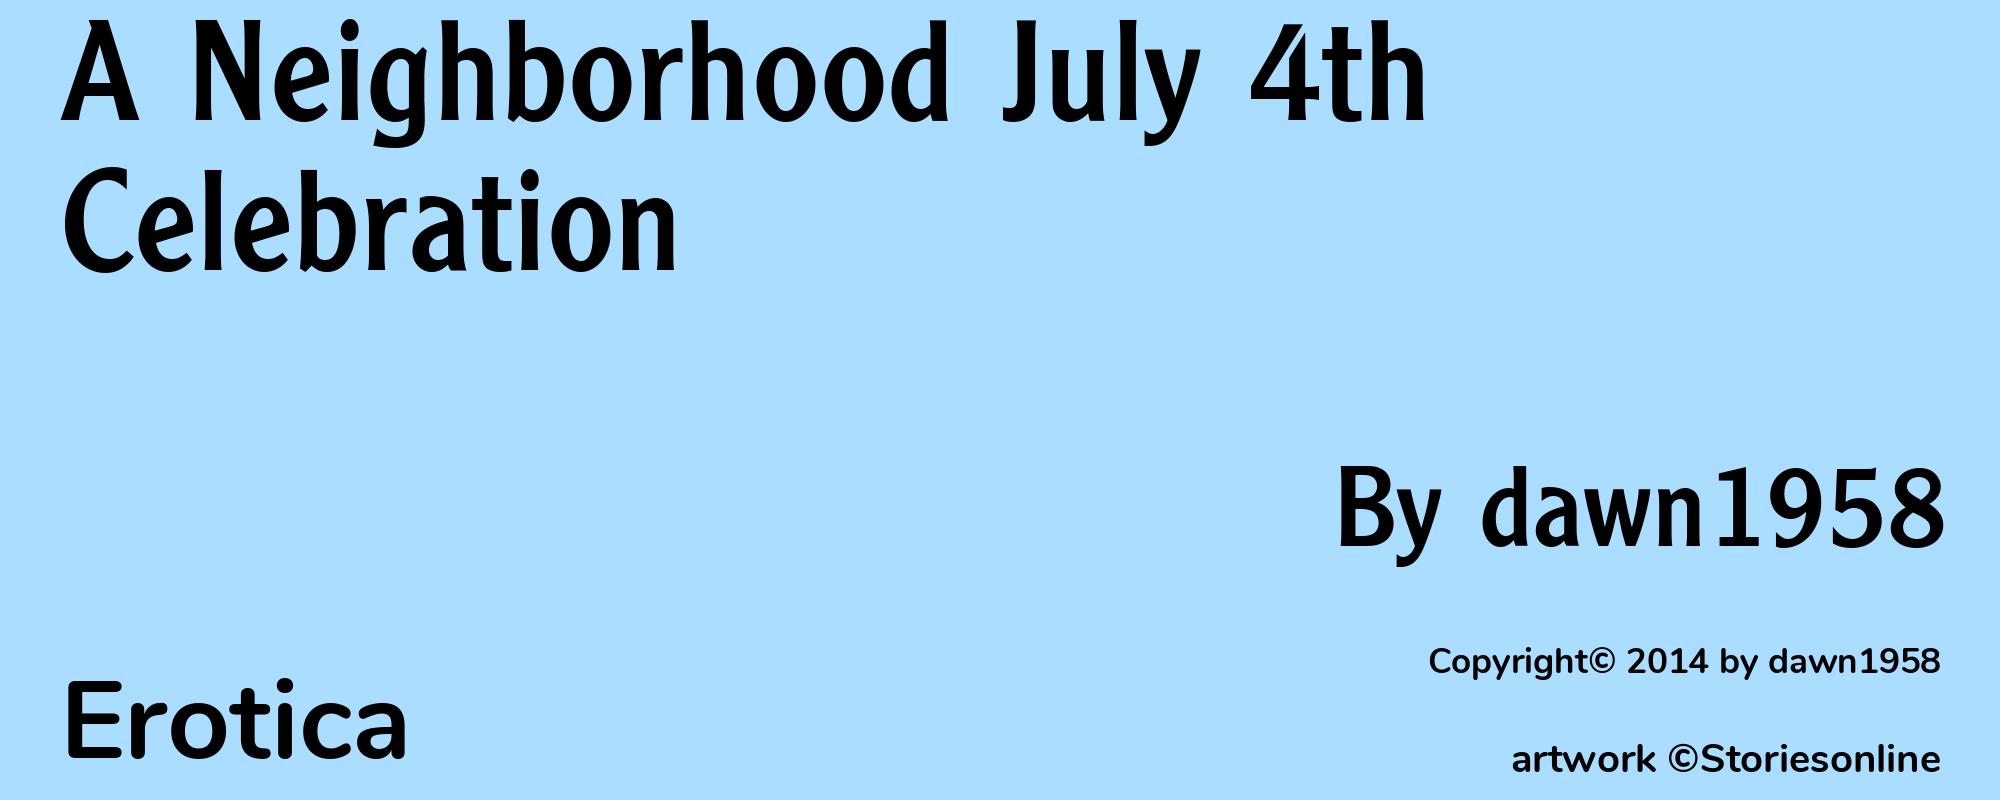 A Neighborhood July 4th Celebration - Cover